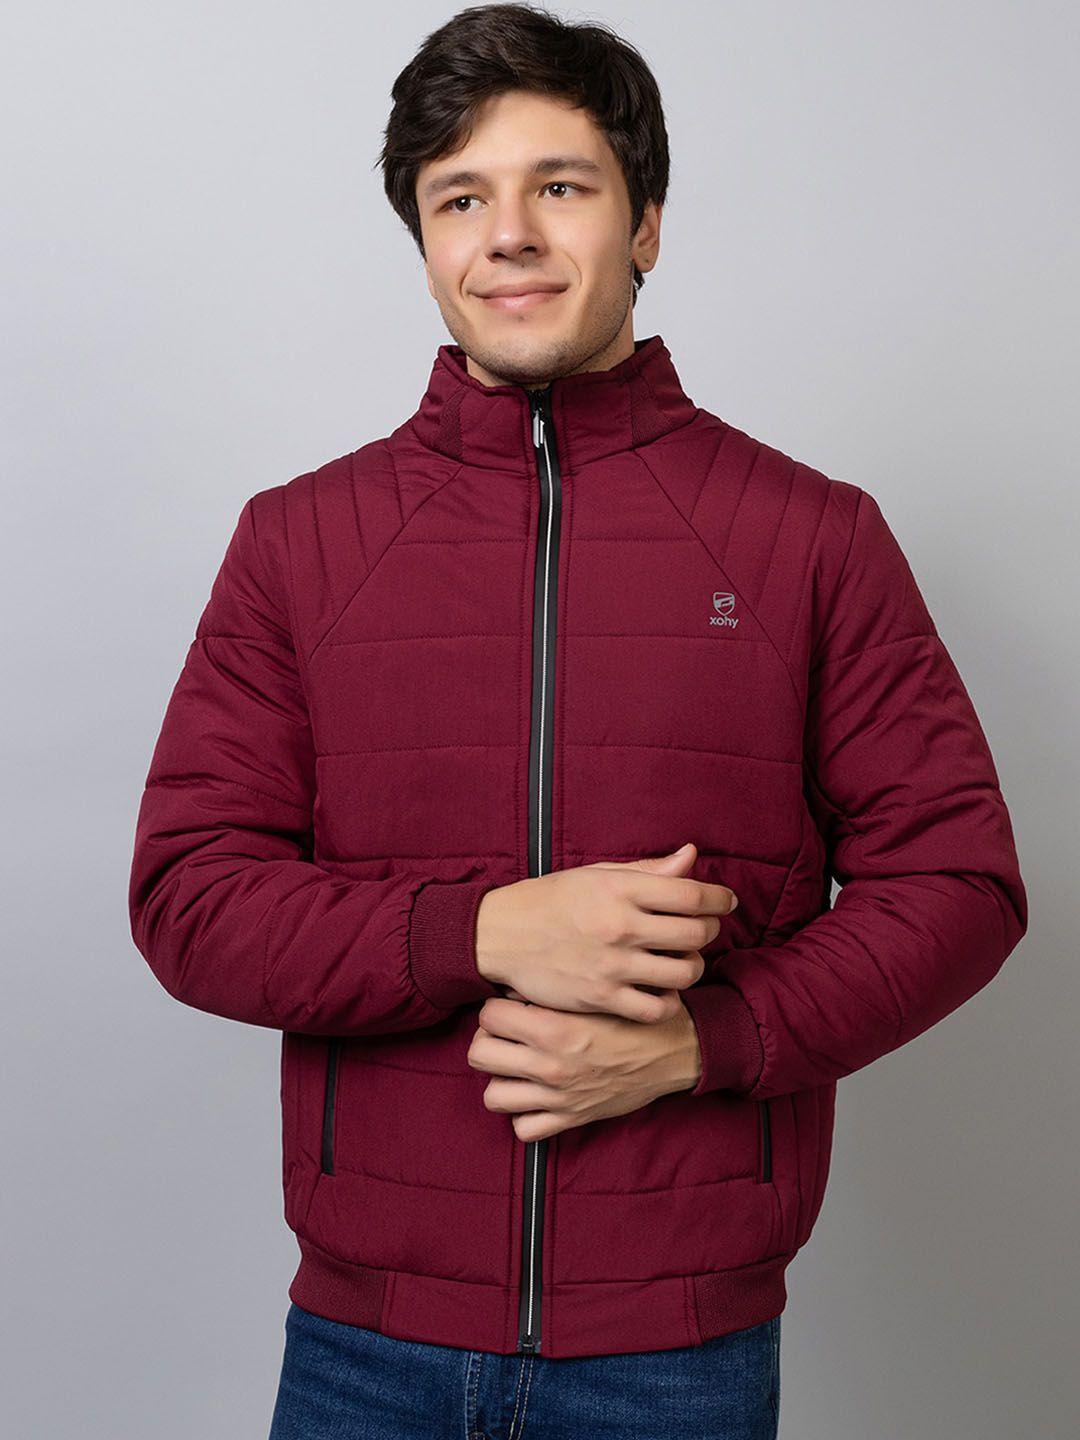 xohy lightweight cotton padded jacket